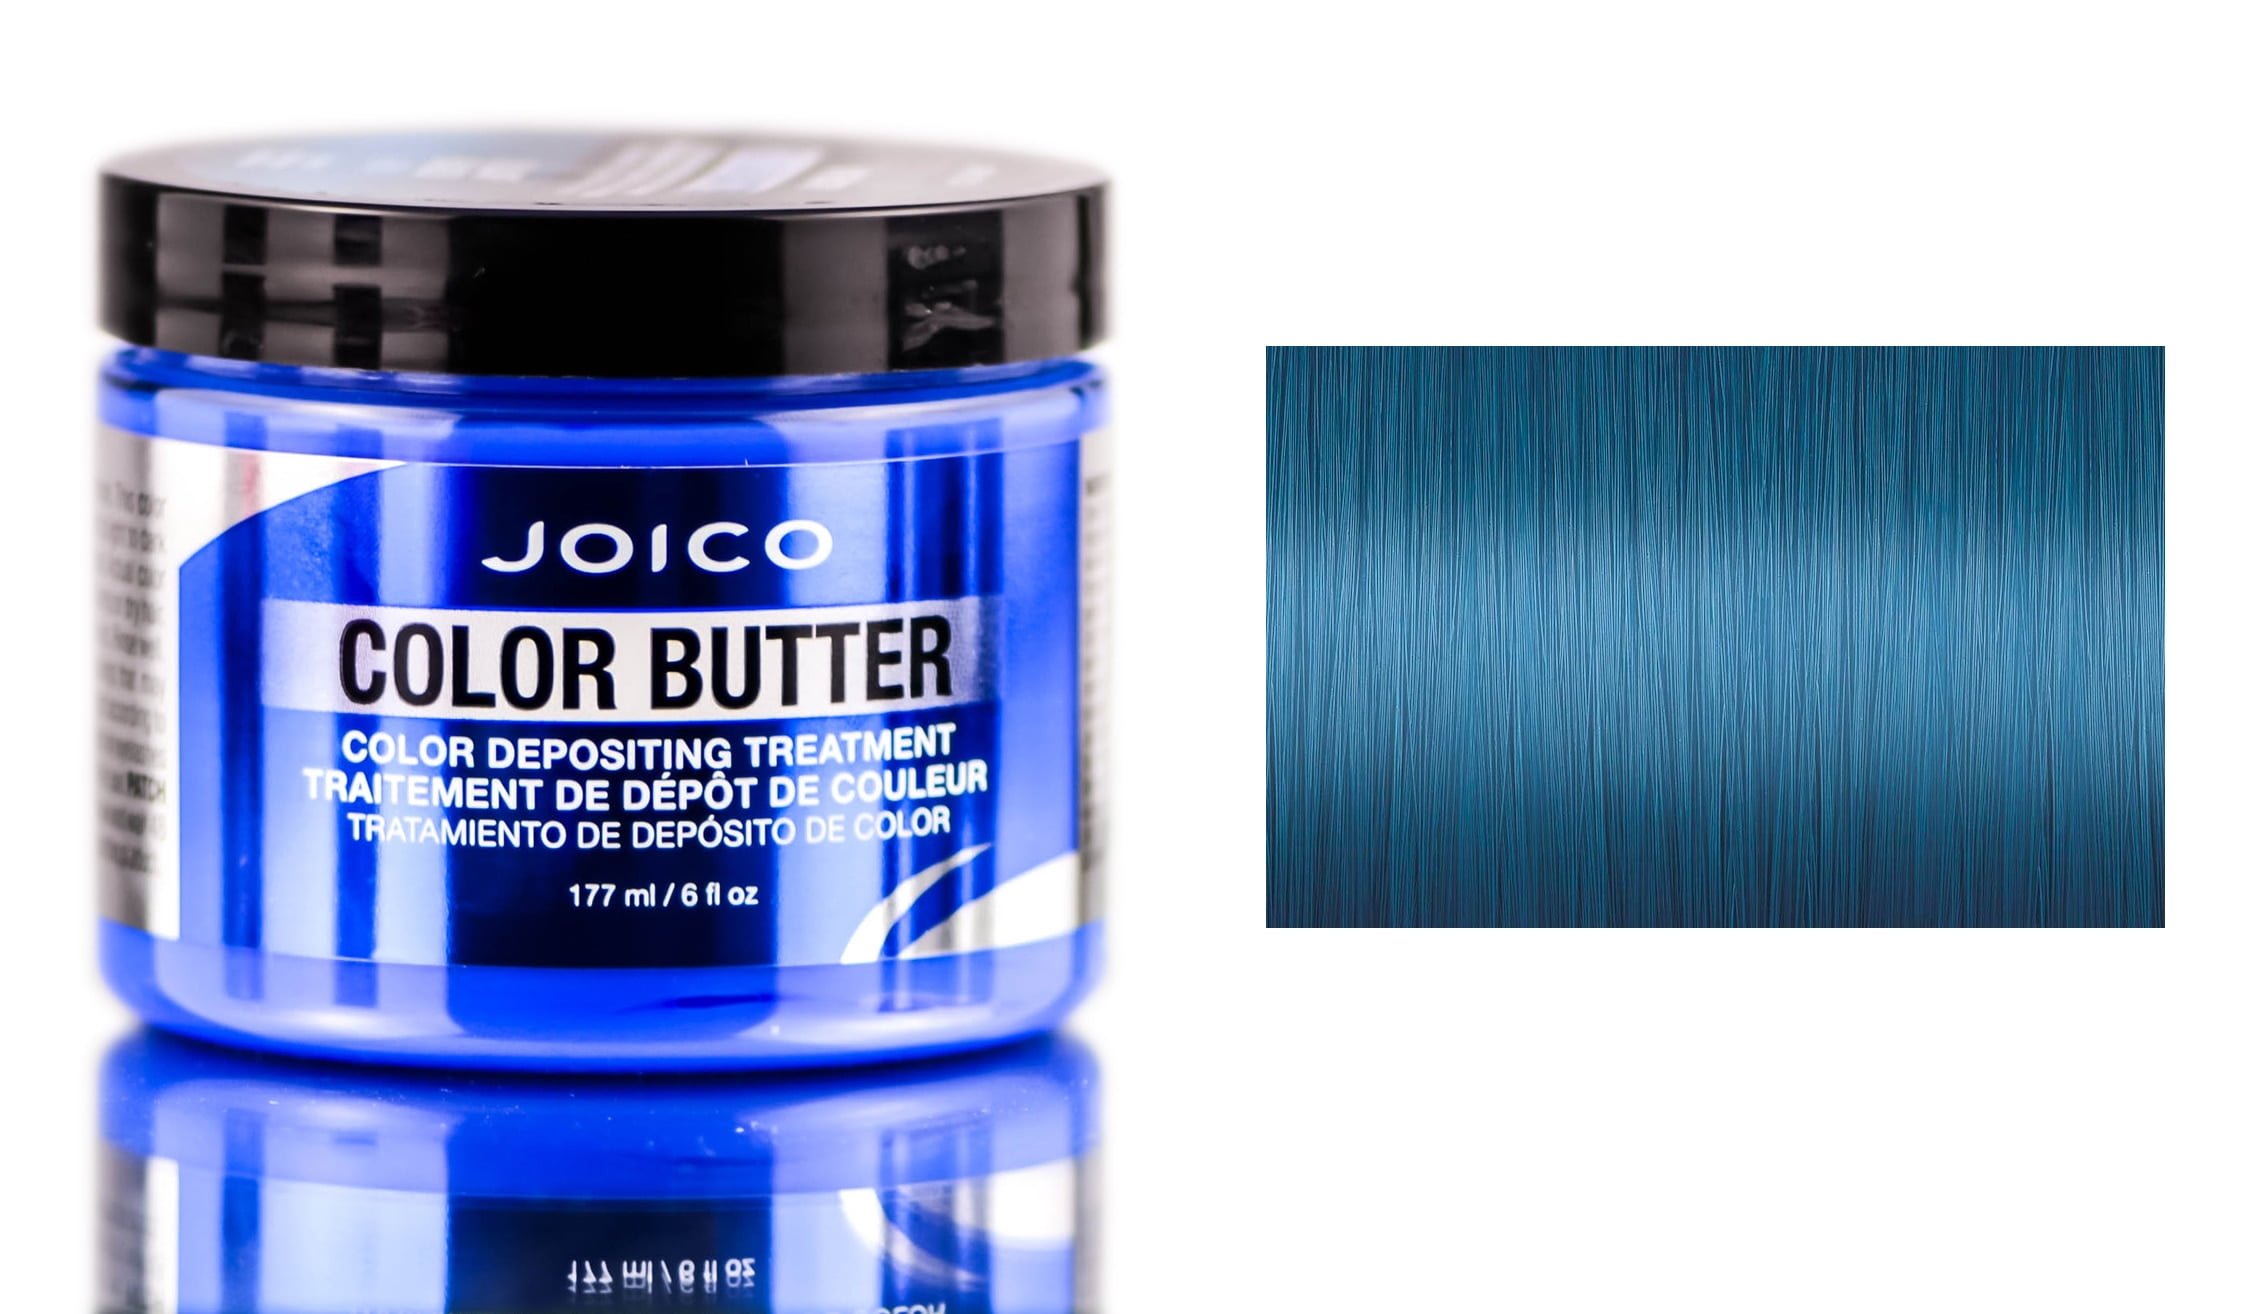 6. Joico Intensity Semi-Permanent Hair Color, Cobalt Blue - wide 8